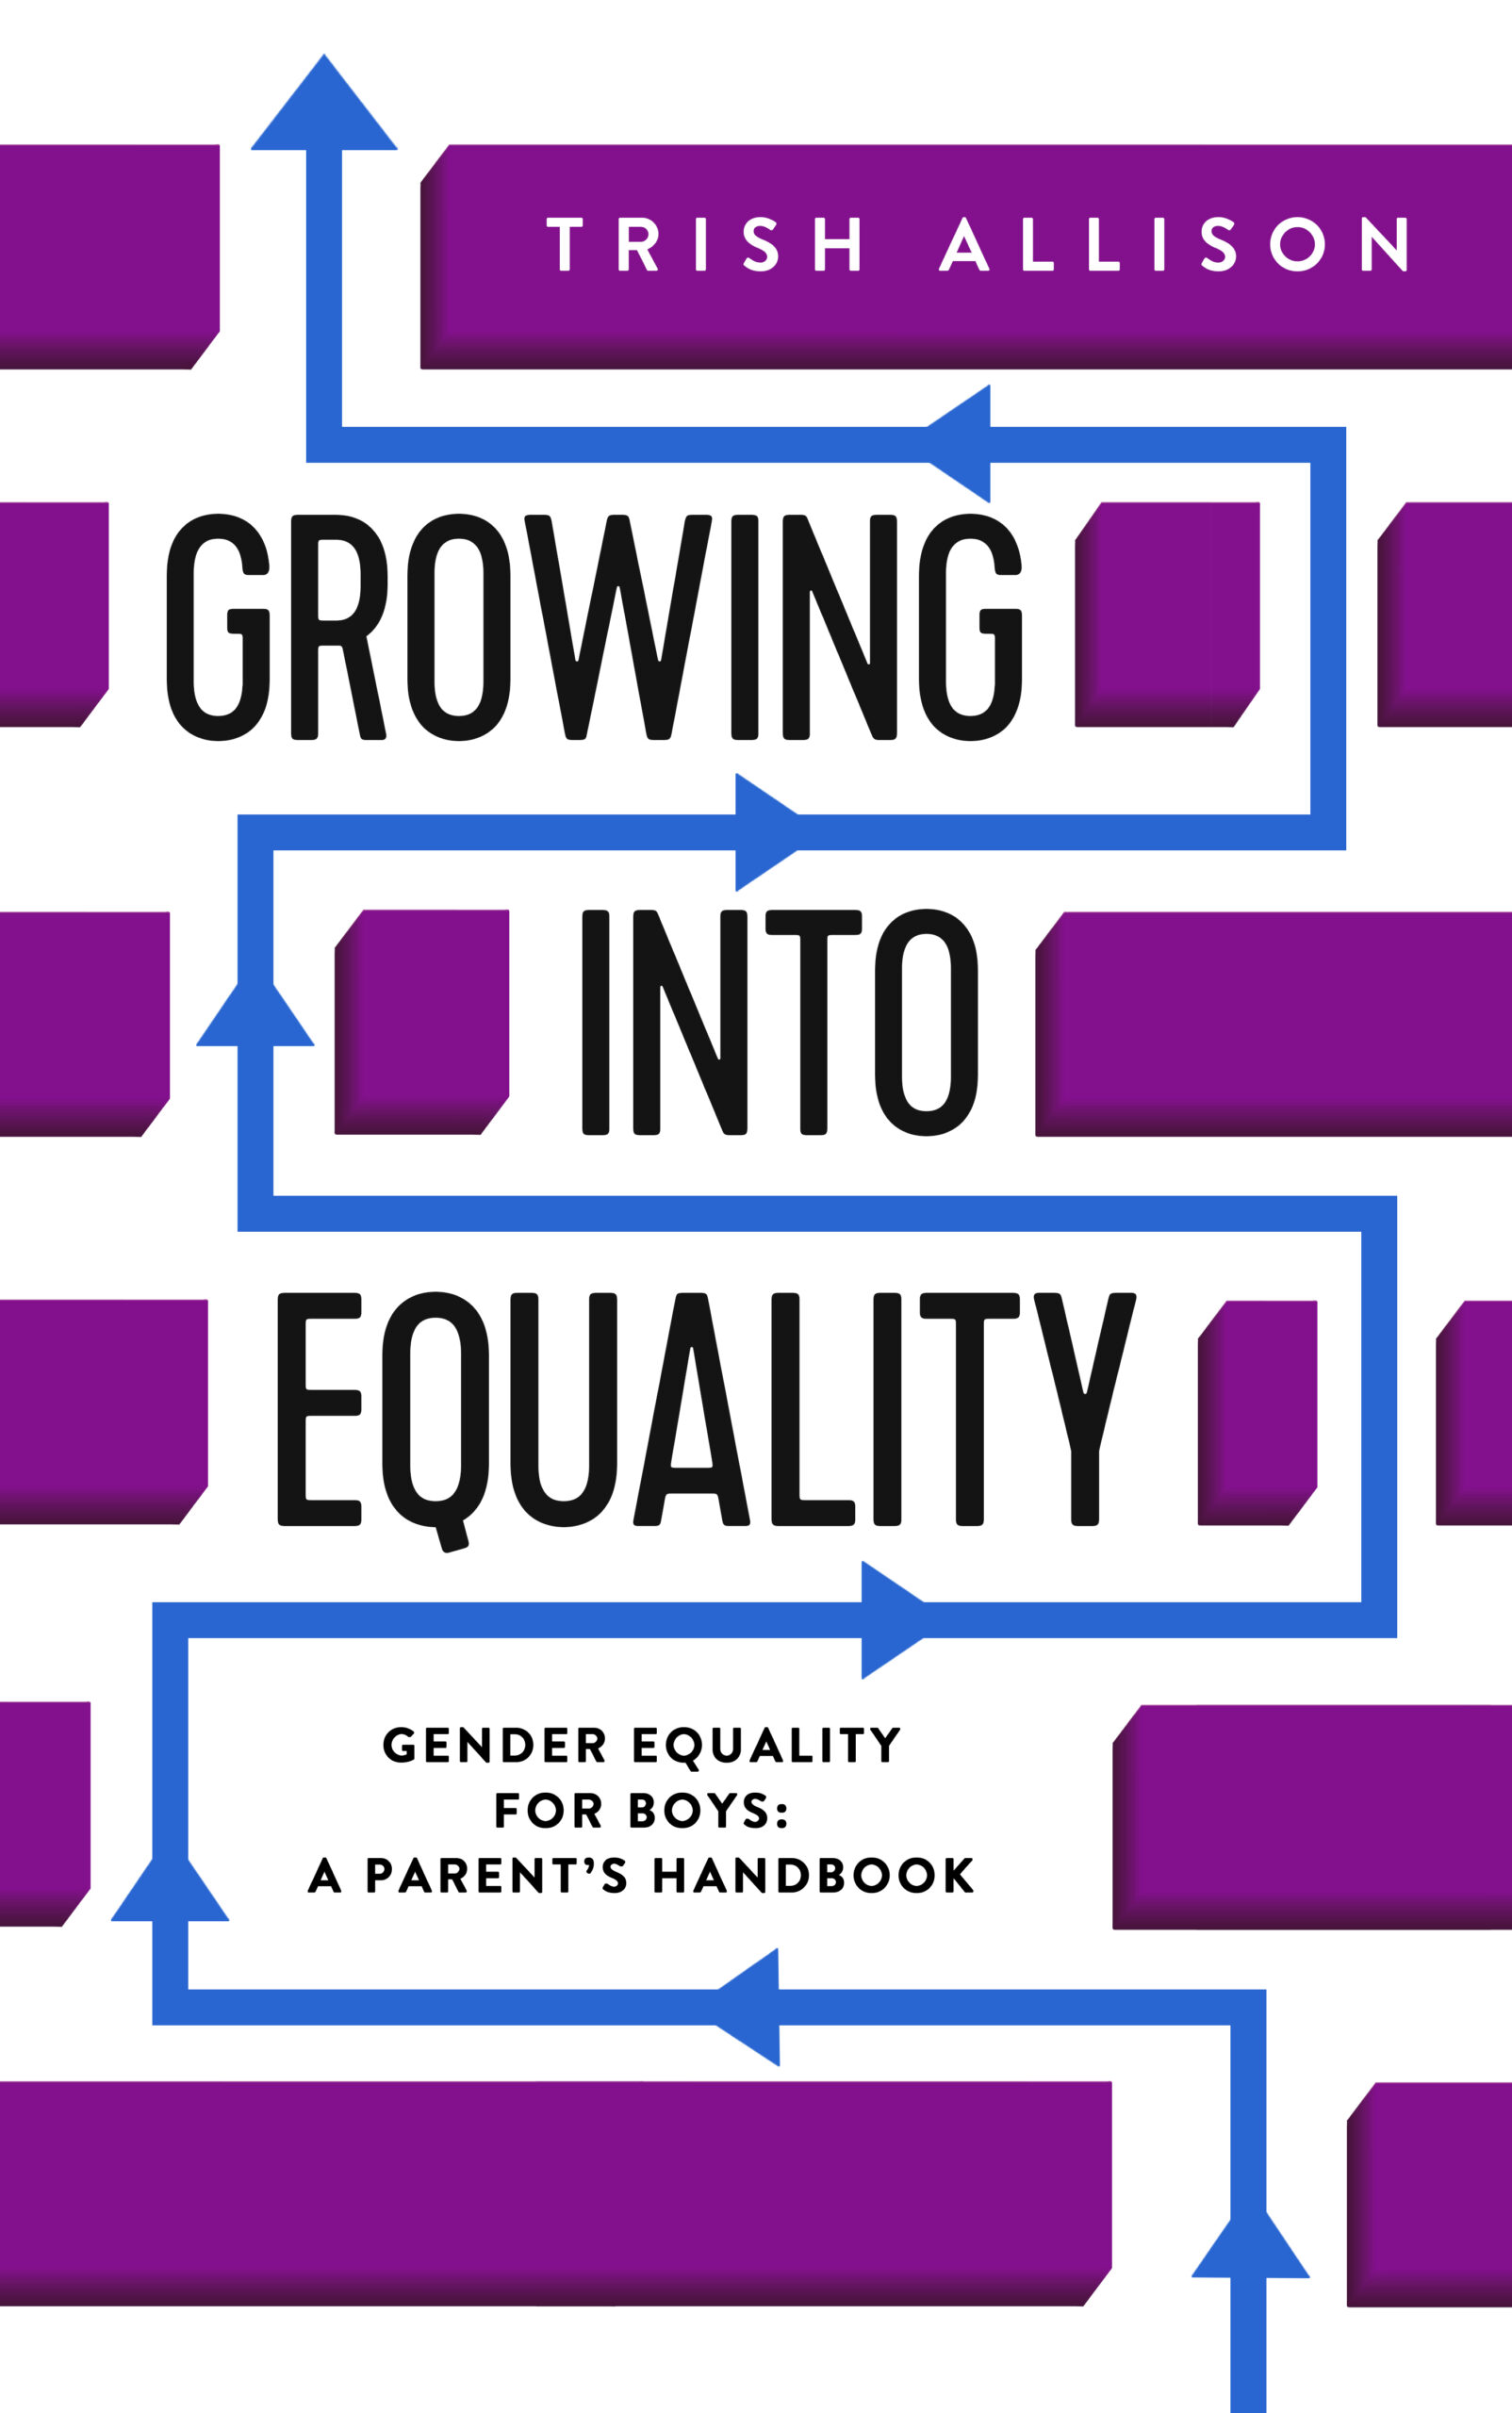 FREE: Gender Equality for Boys: A Parent’s Handbook by Trish Allison